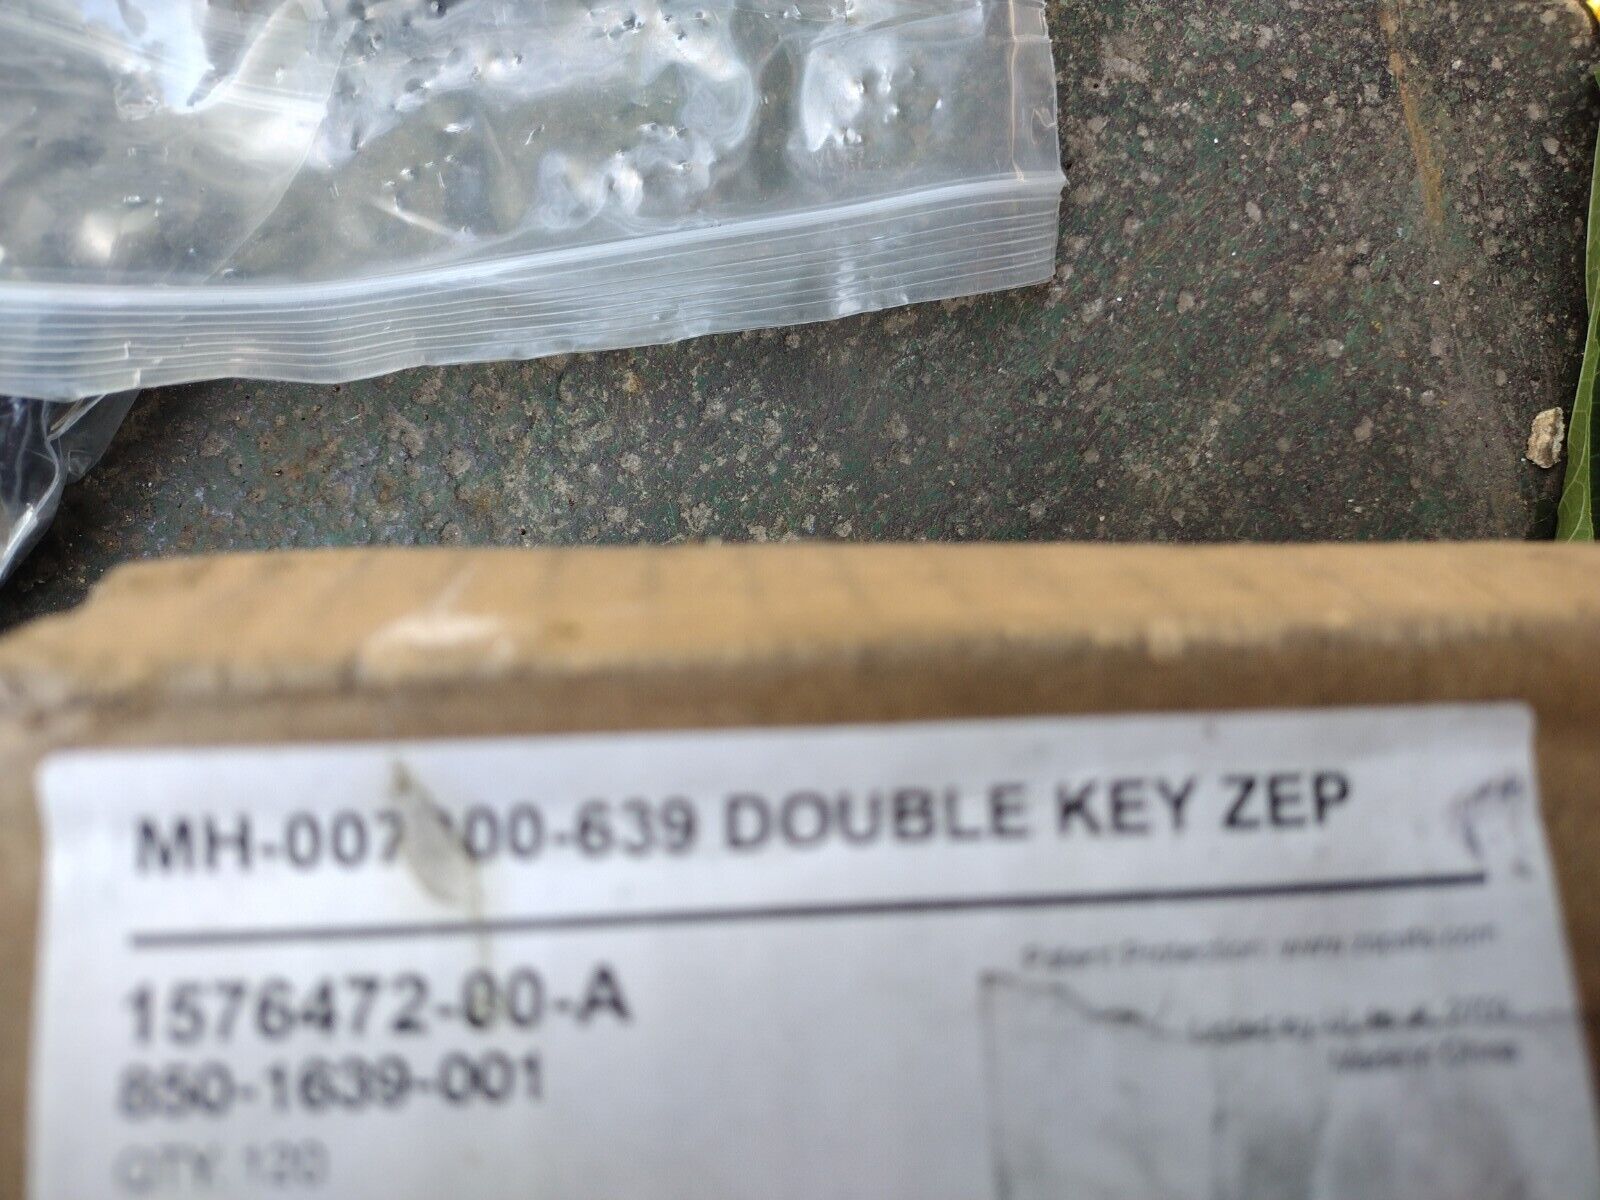 Zip Solar Double Key Zep 1576472-00-a(20ct)